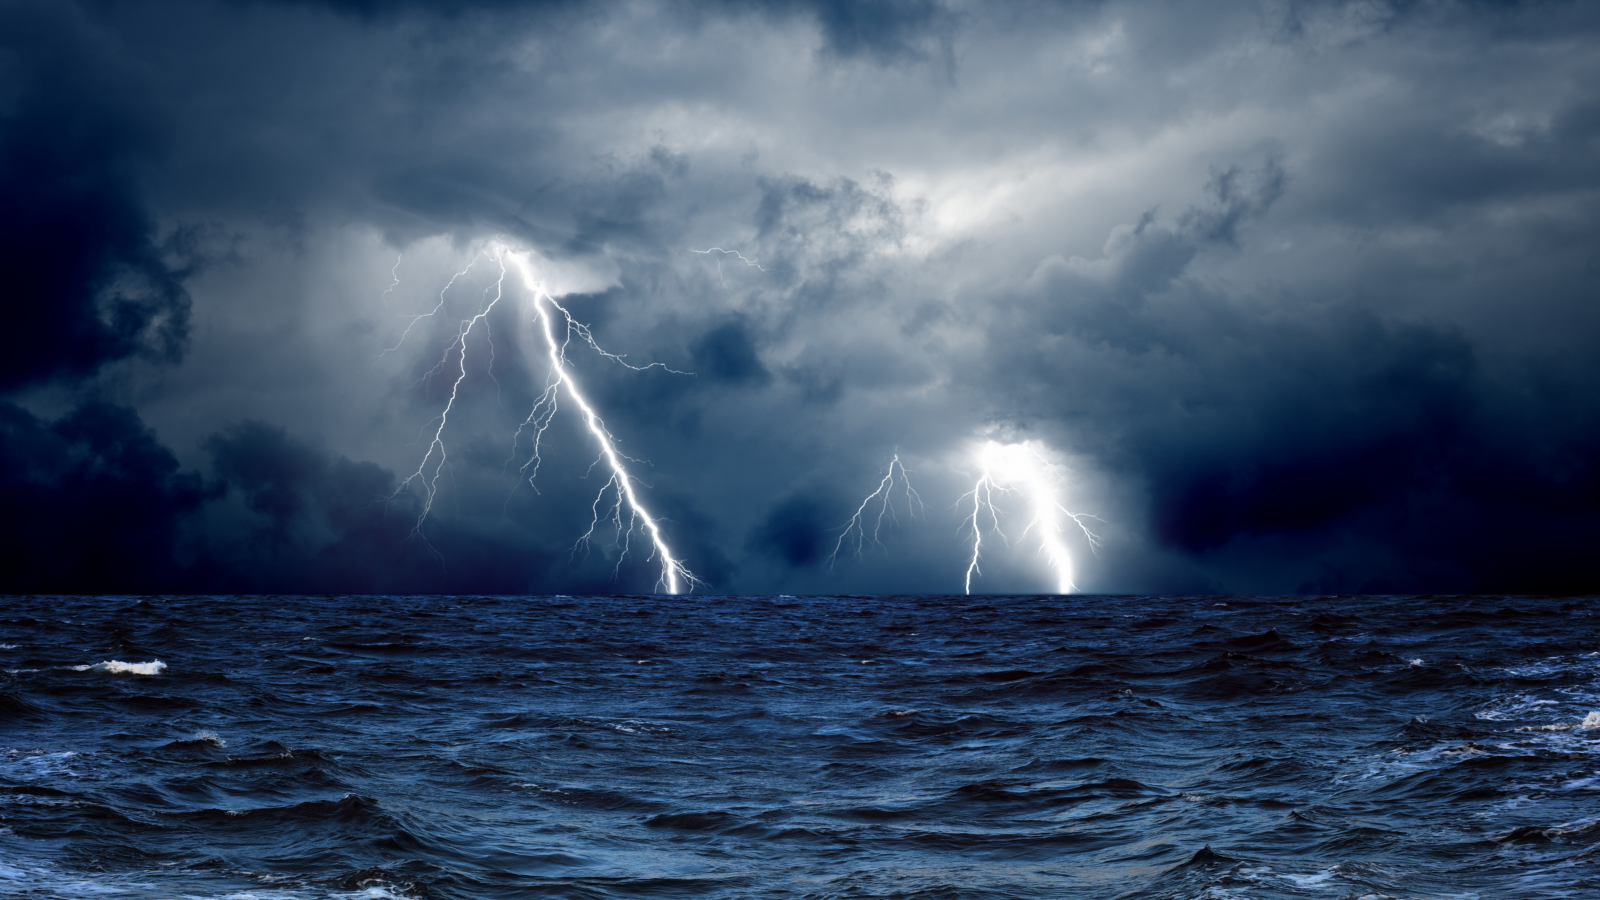 природа, море, океан, вода, молния, гроза, гром, тучи, облака, шторм, ураган